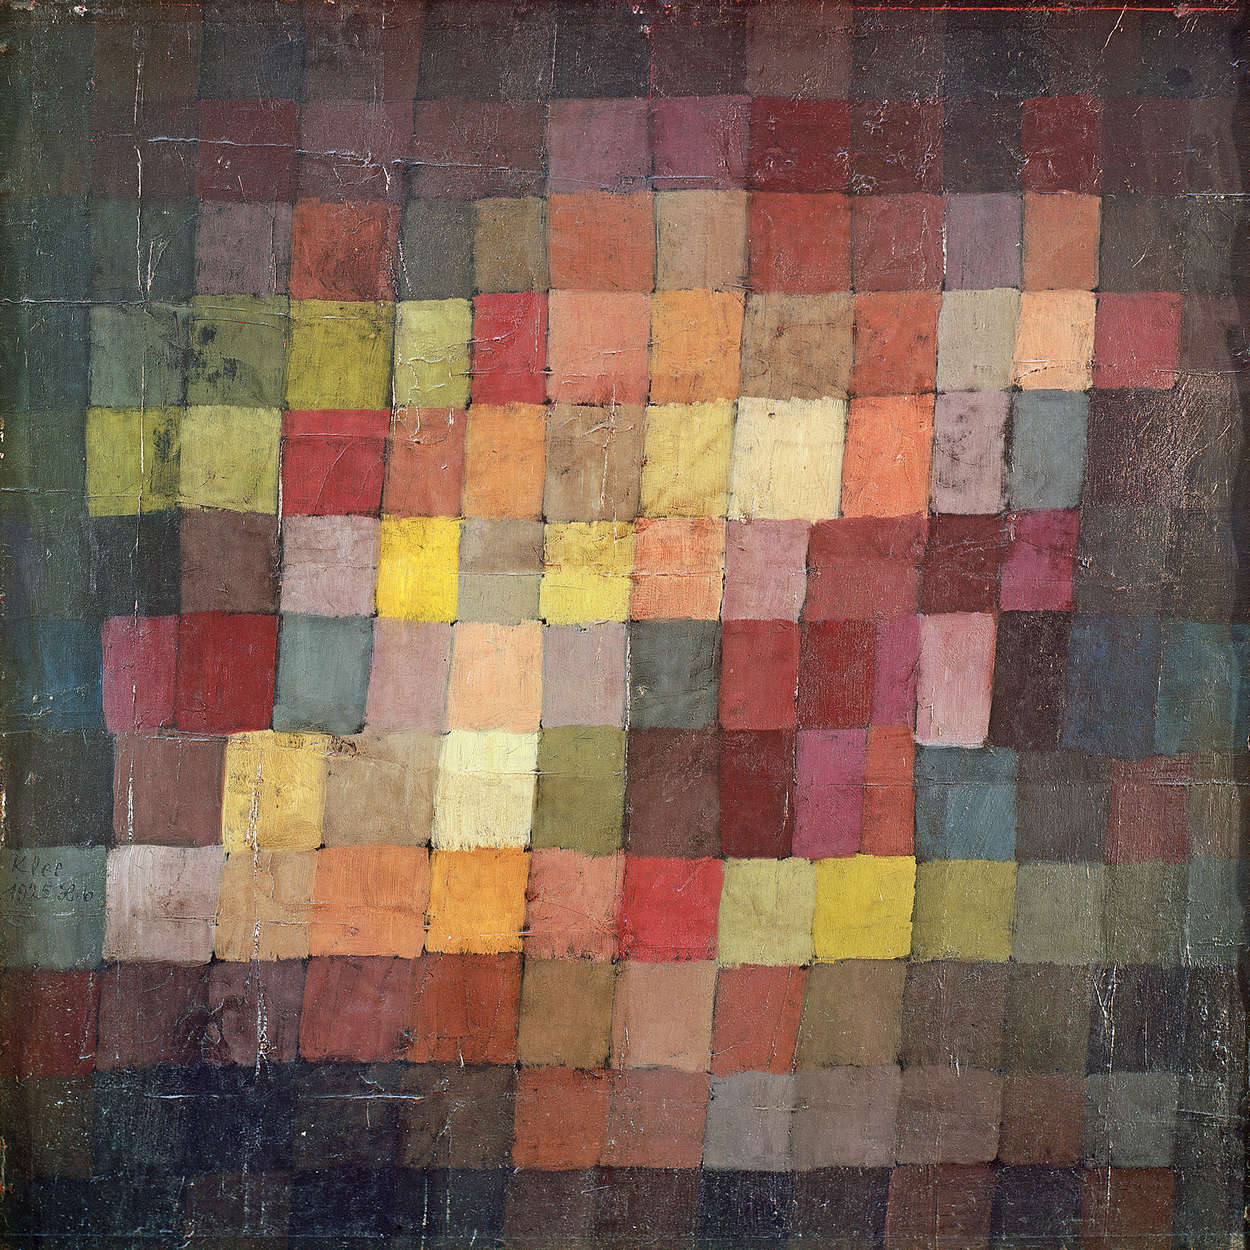             Old Harmony" muurschildering van Paul Klee
        